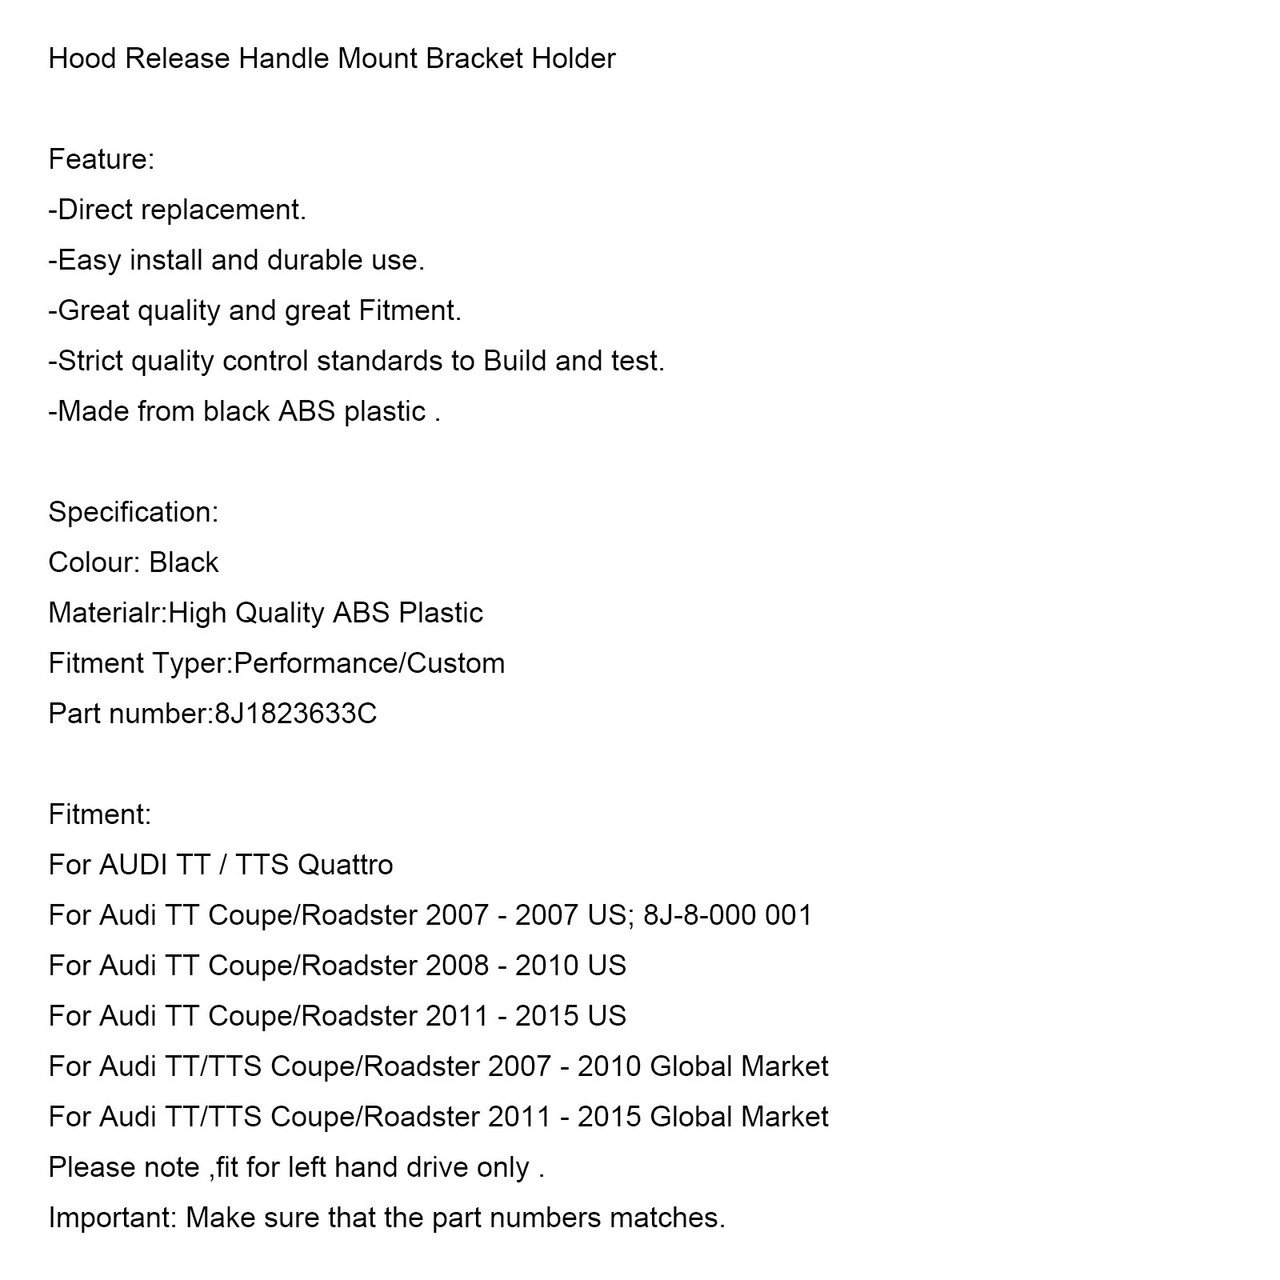 Hood Release Handle Mount Bracket Holder Fit for AUDI TT Coupe/Roadster 2007 TTS Coupe 07-10 Black